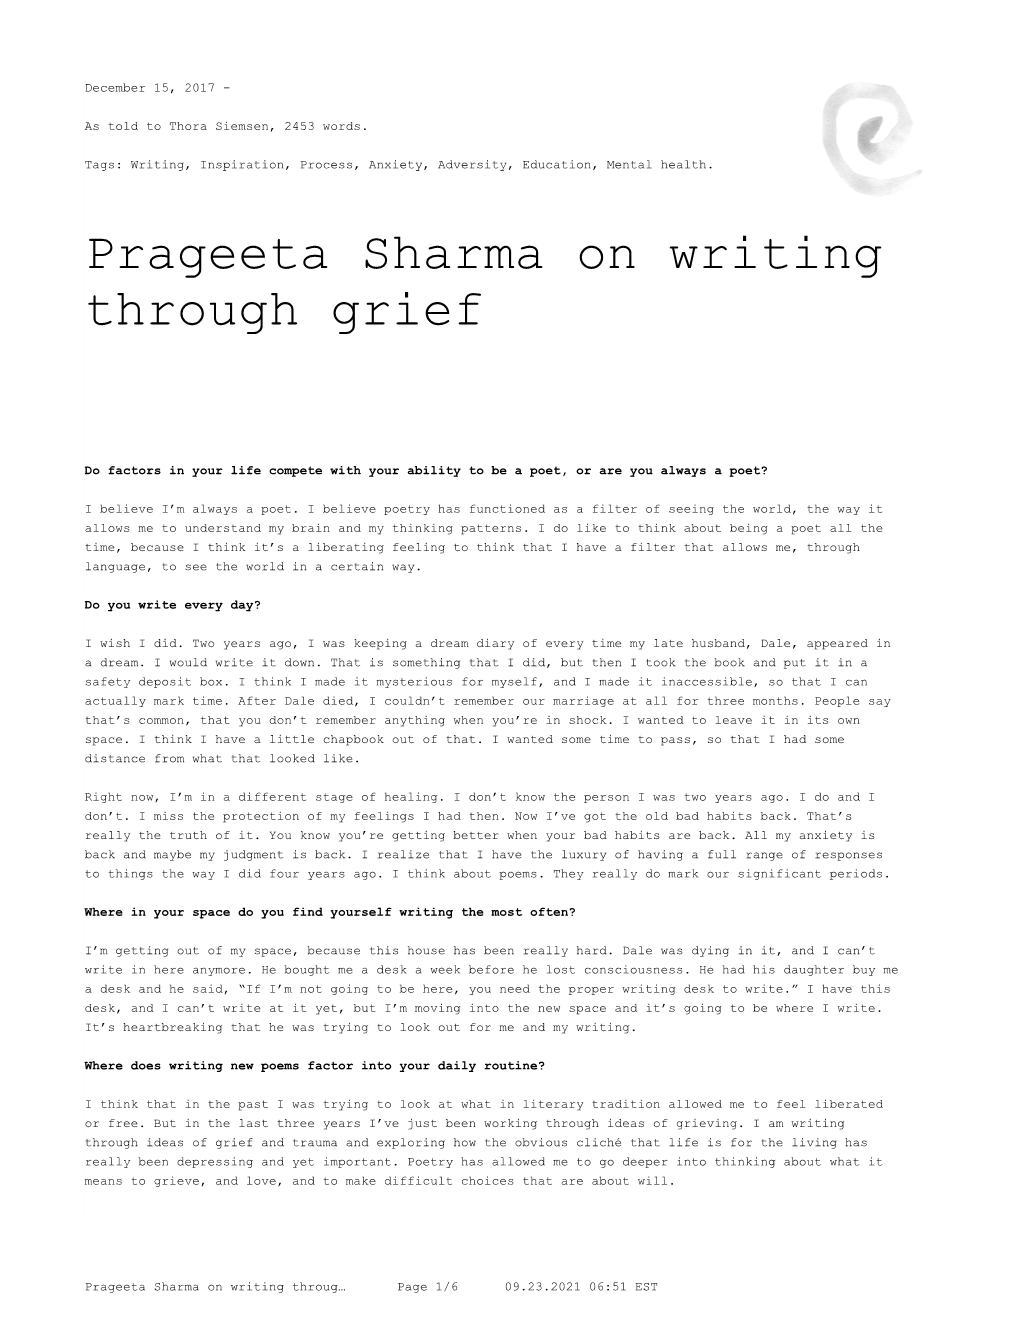 Prageeta Sharma on Writing Through Grief – the Creative Independent